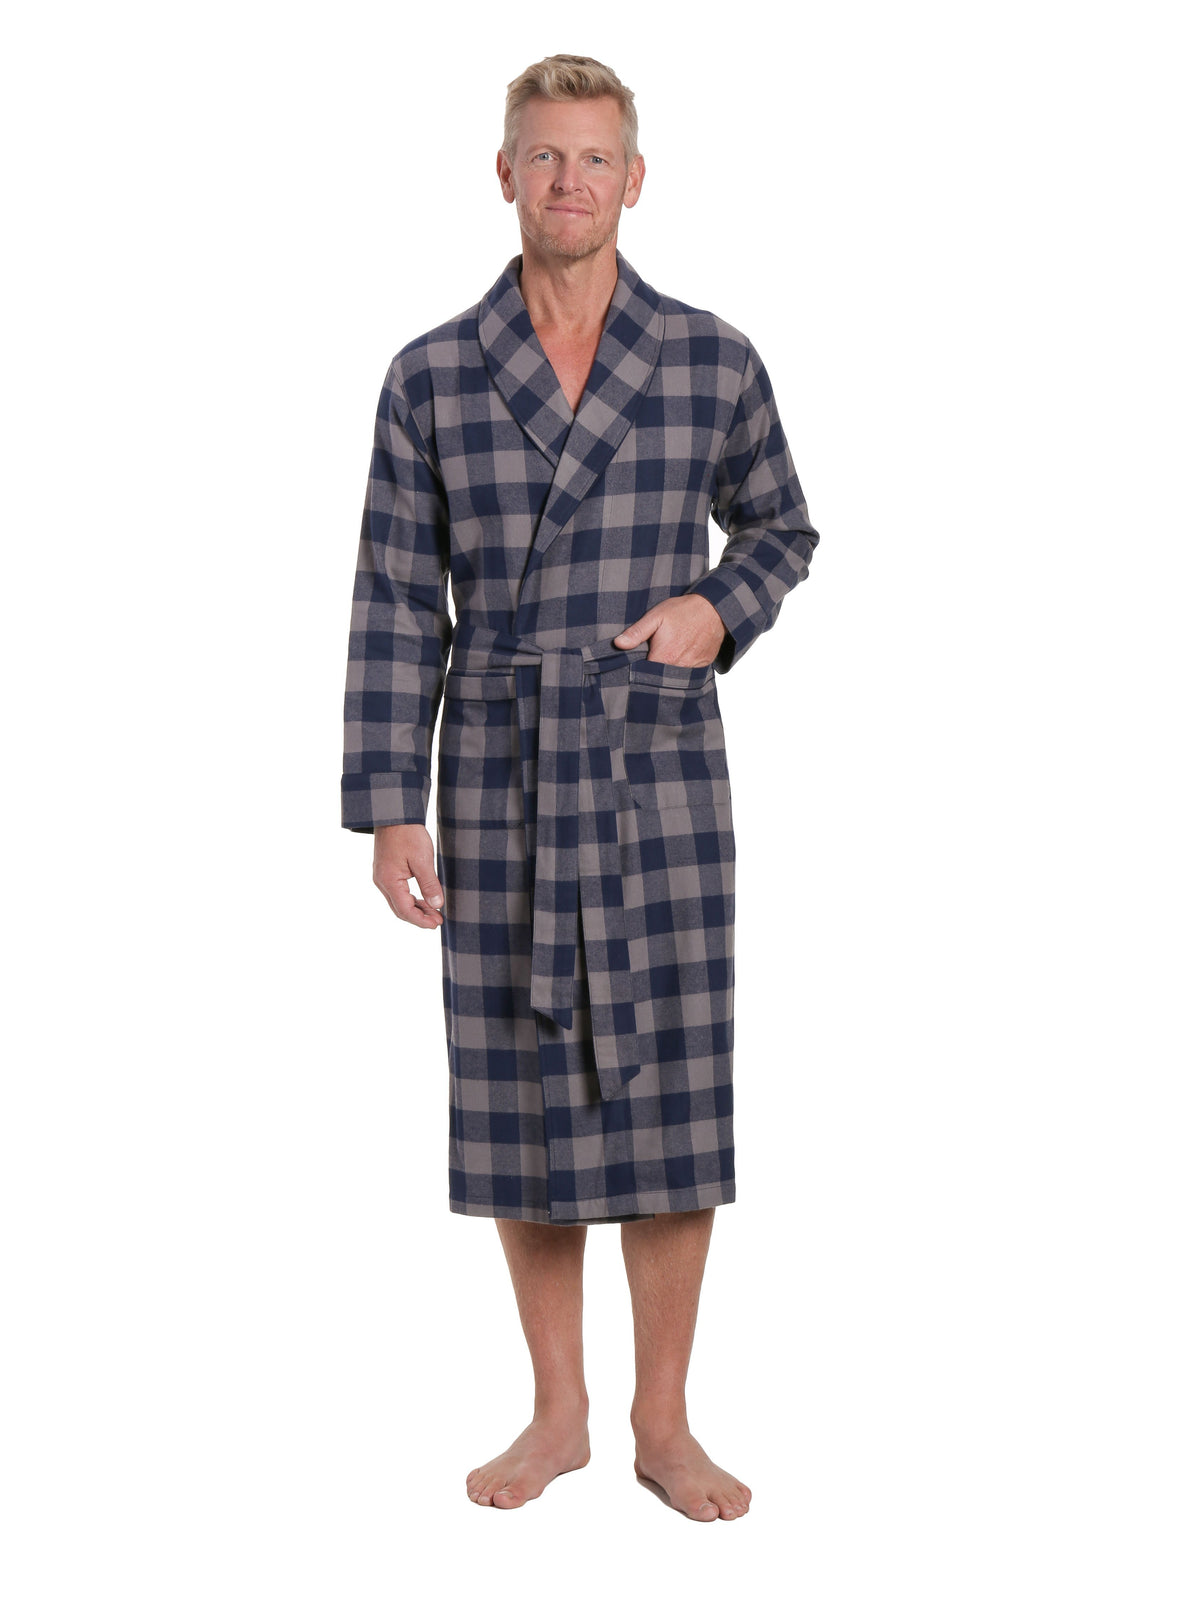 Mens Premium 100% Cotton Flannel Robe - Gingham Checks - Charcoal-Navy